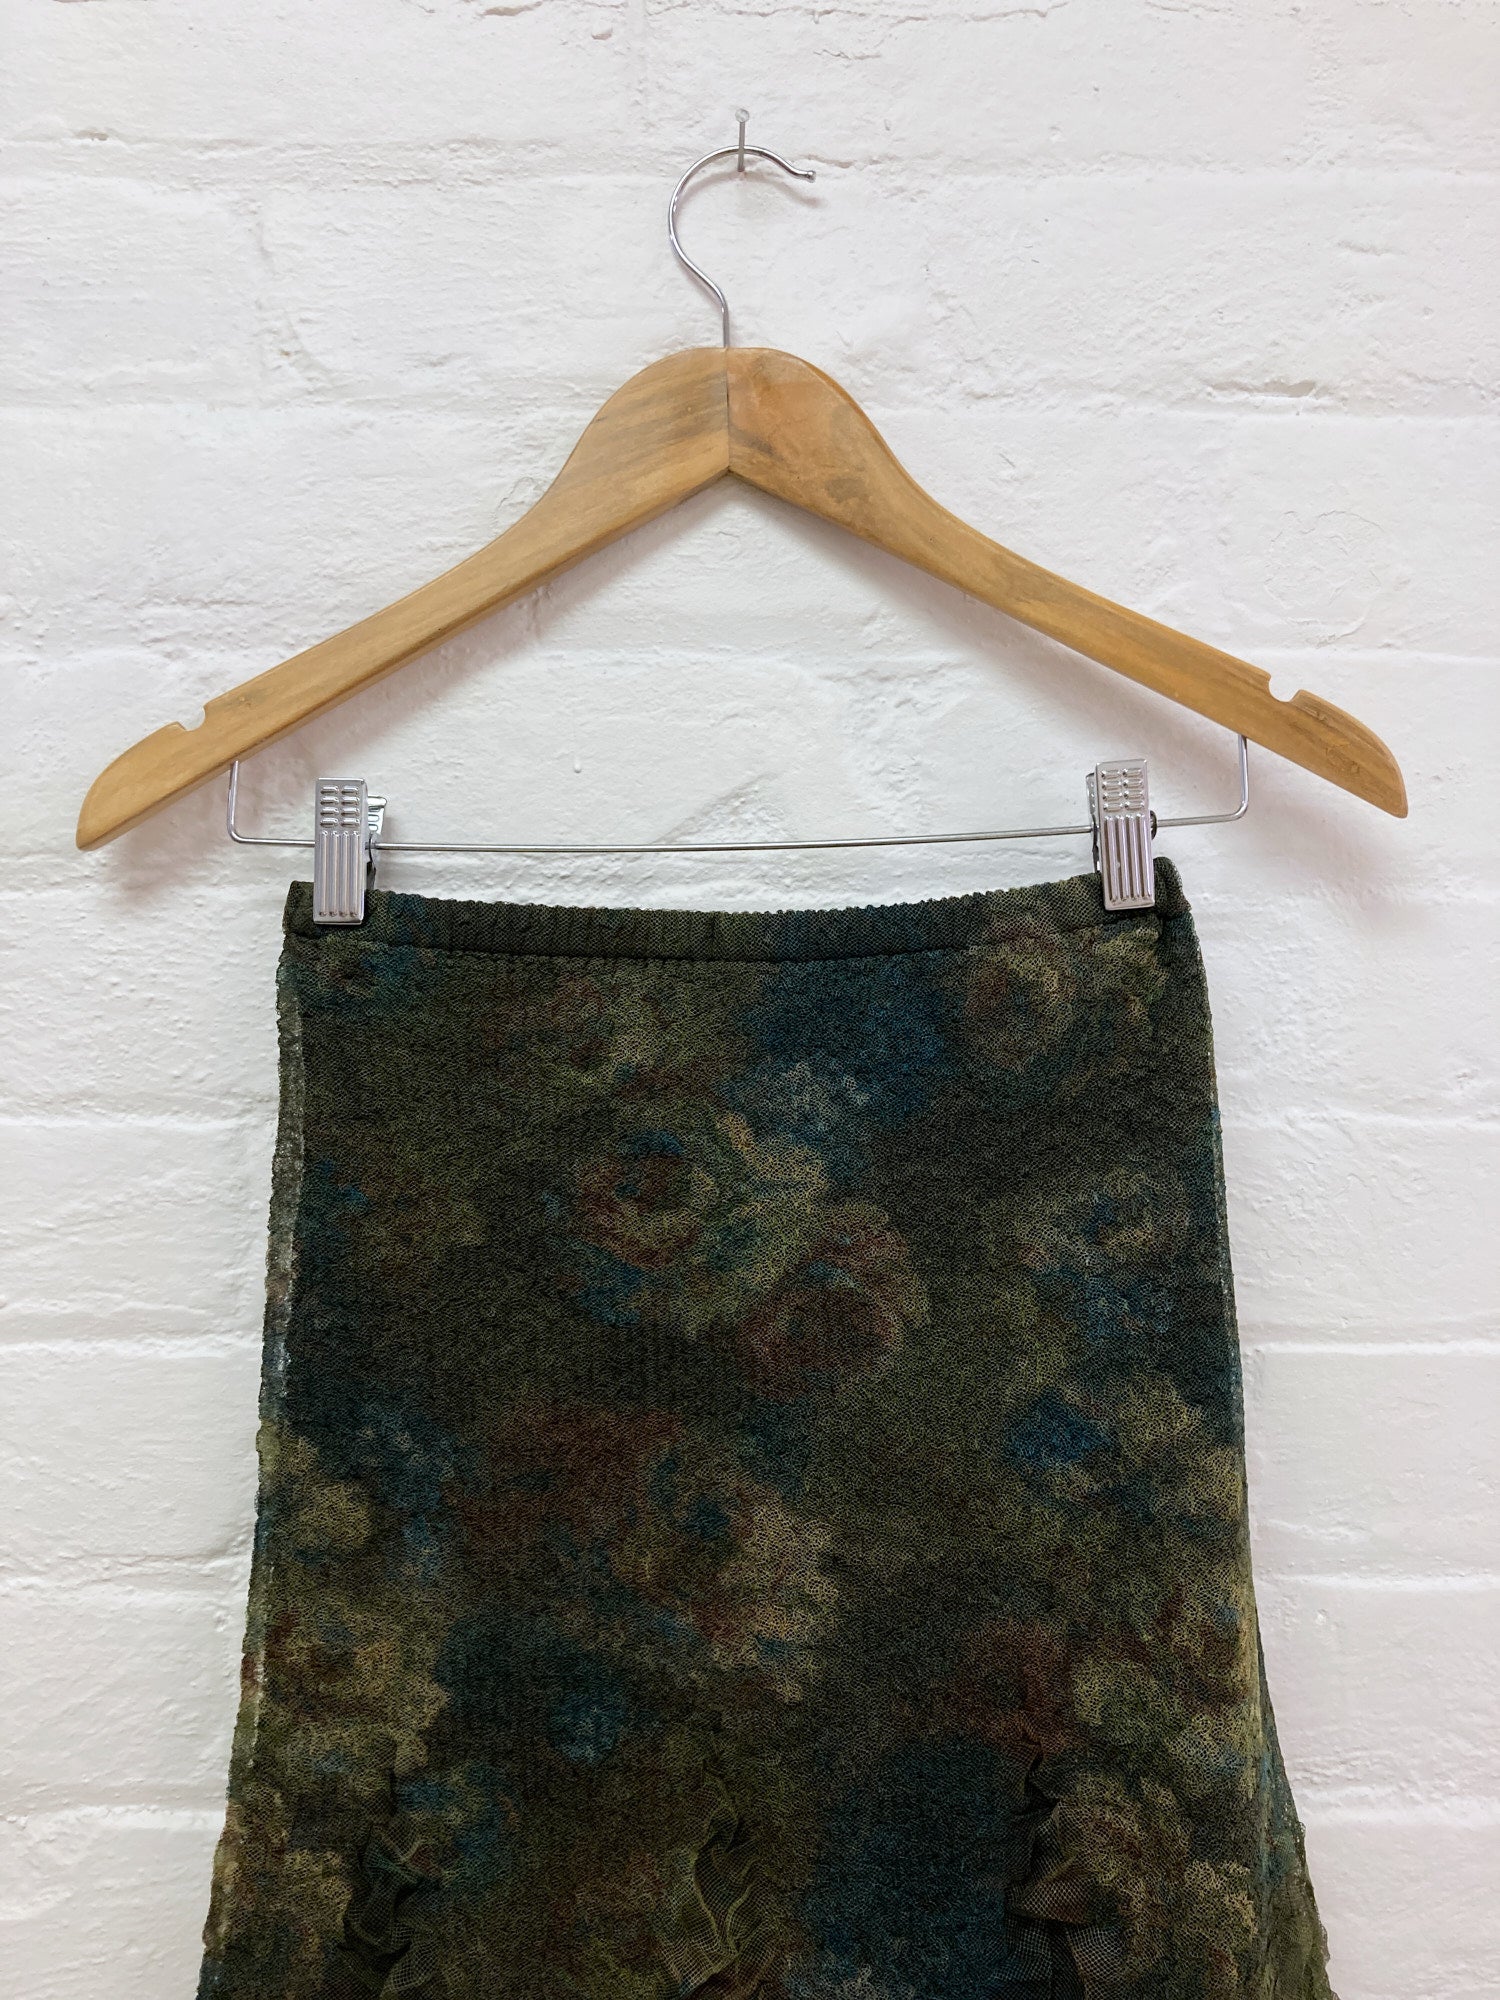 Yoshiki Hishinuma Peplum green floral print polyester layered mesh skirt - 1 S